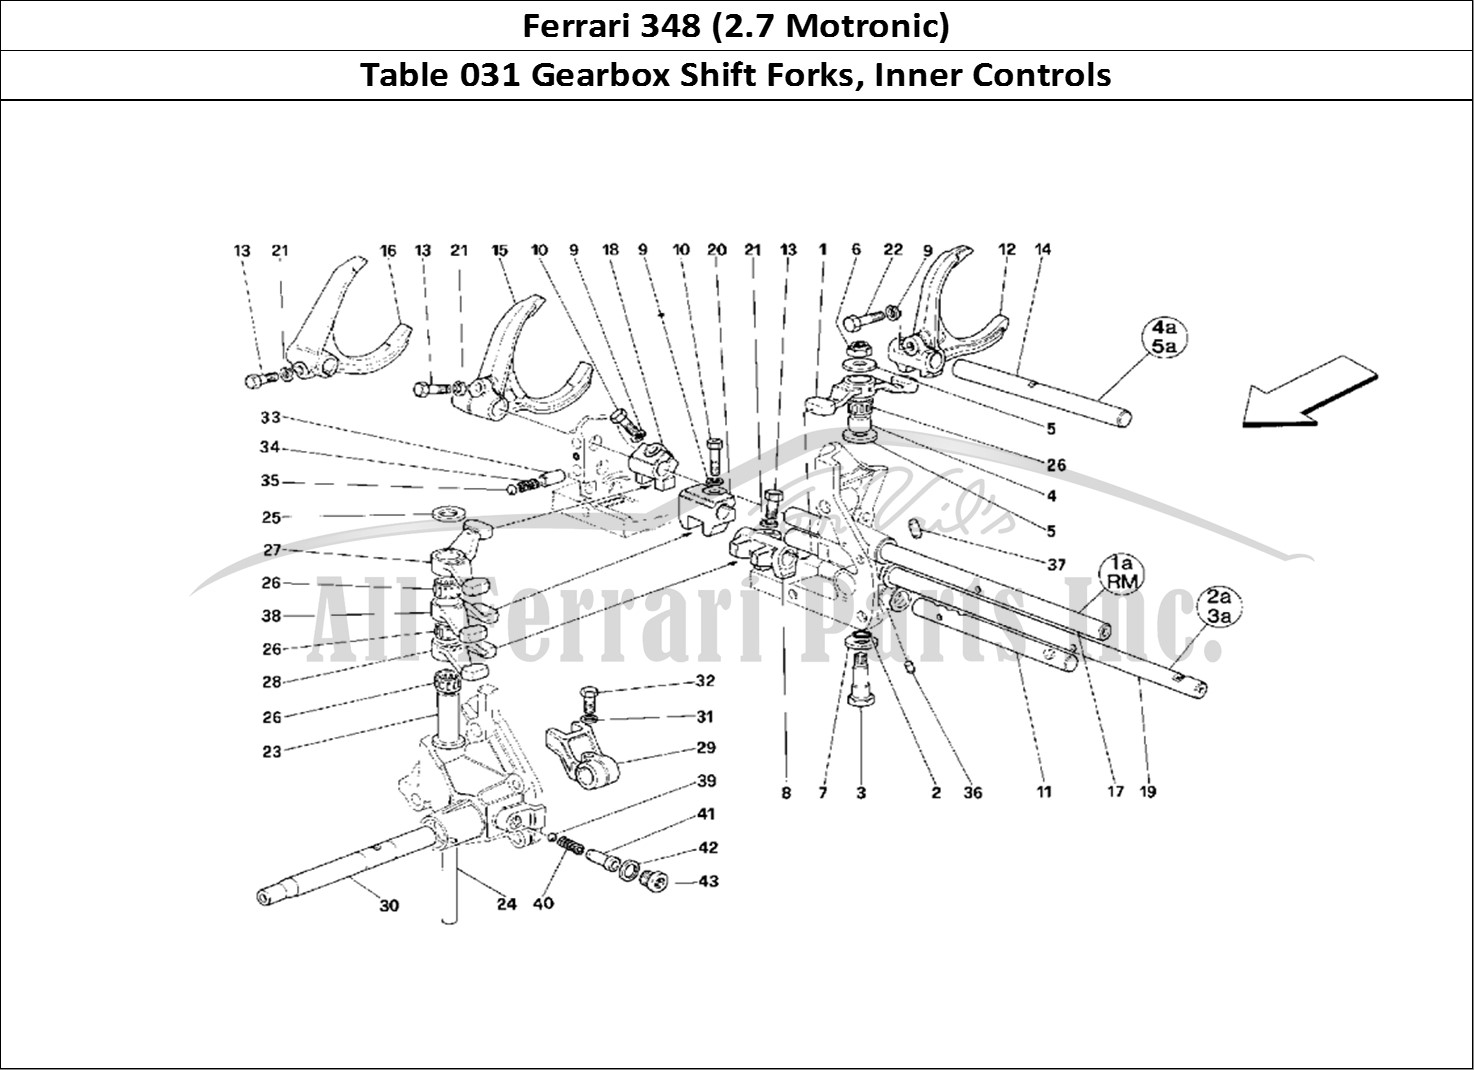 Ferrari Parts Ferrari 348 (2.7 Motronic) Page 031 Inside Gearbox Controls